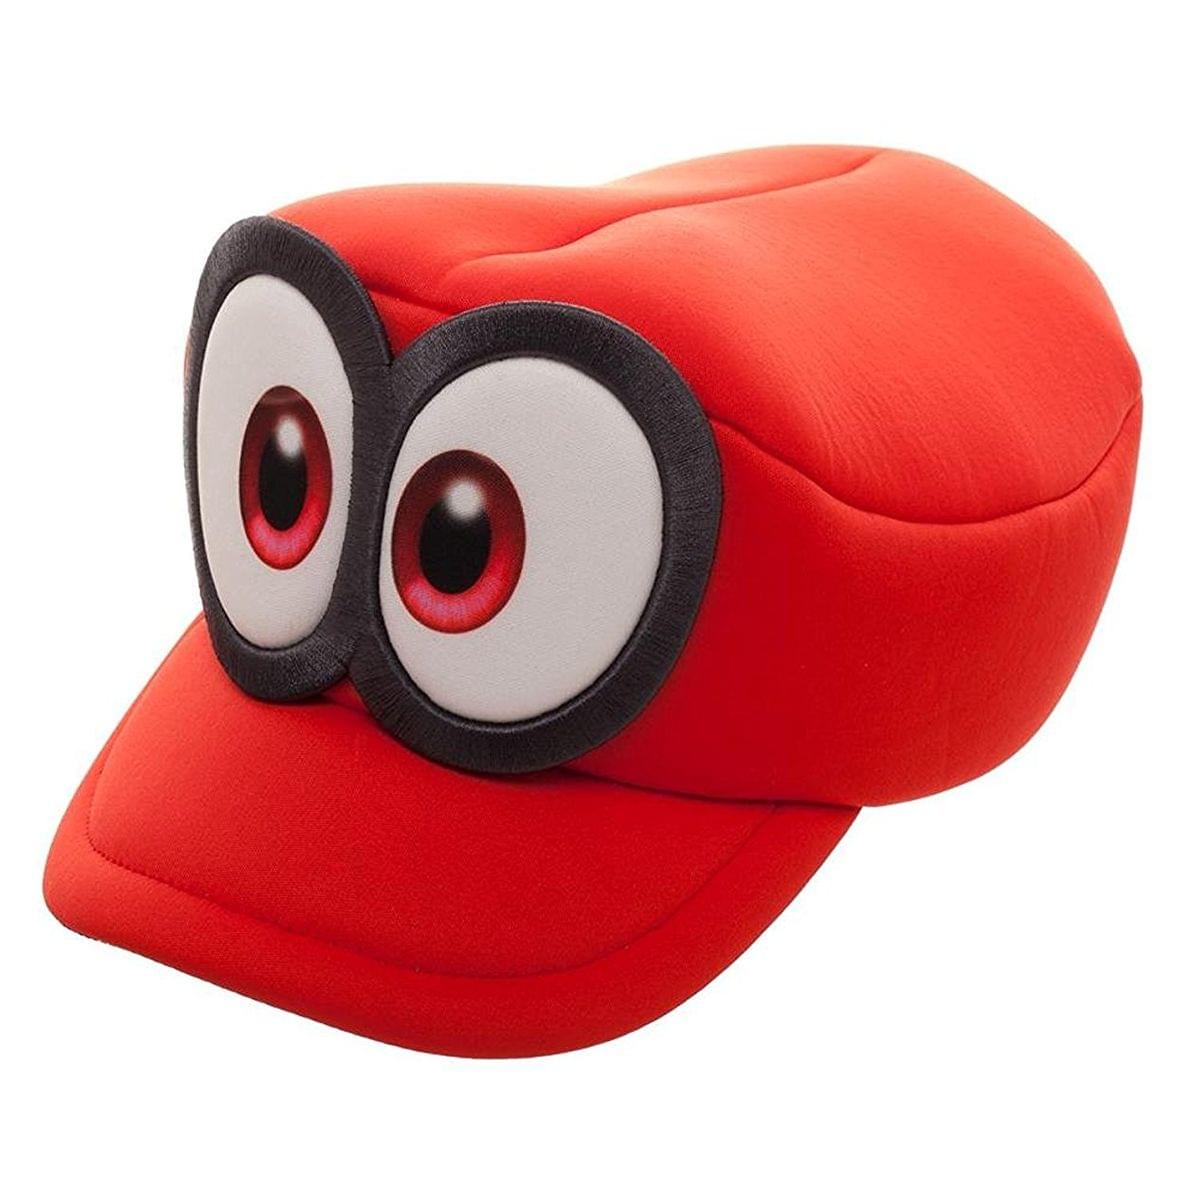 Super Mario Odyssey Cappy Hat Cosplay Accessory